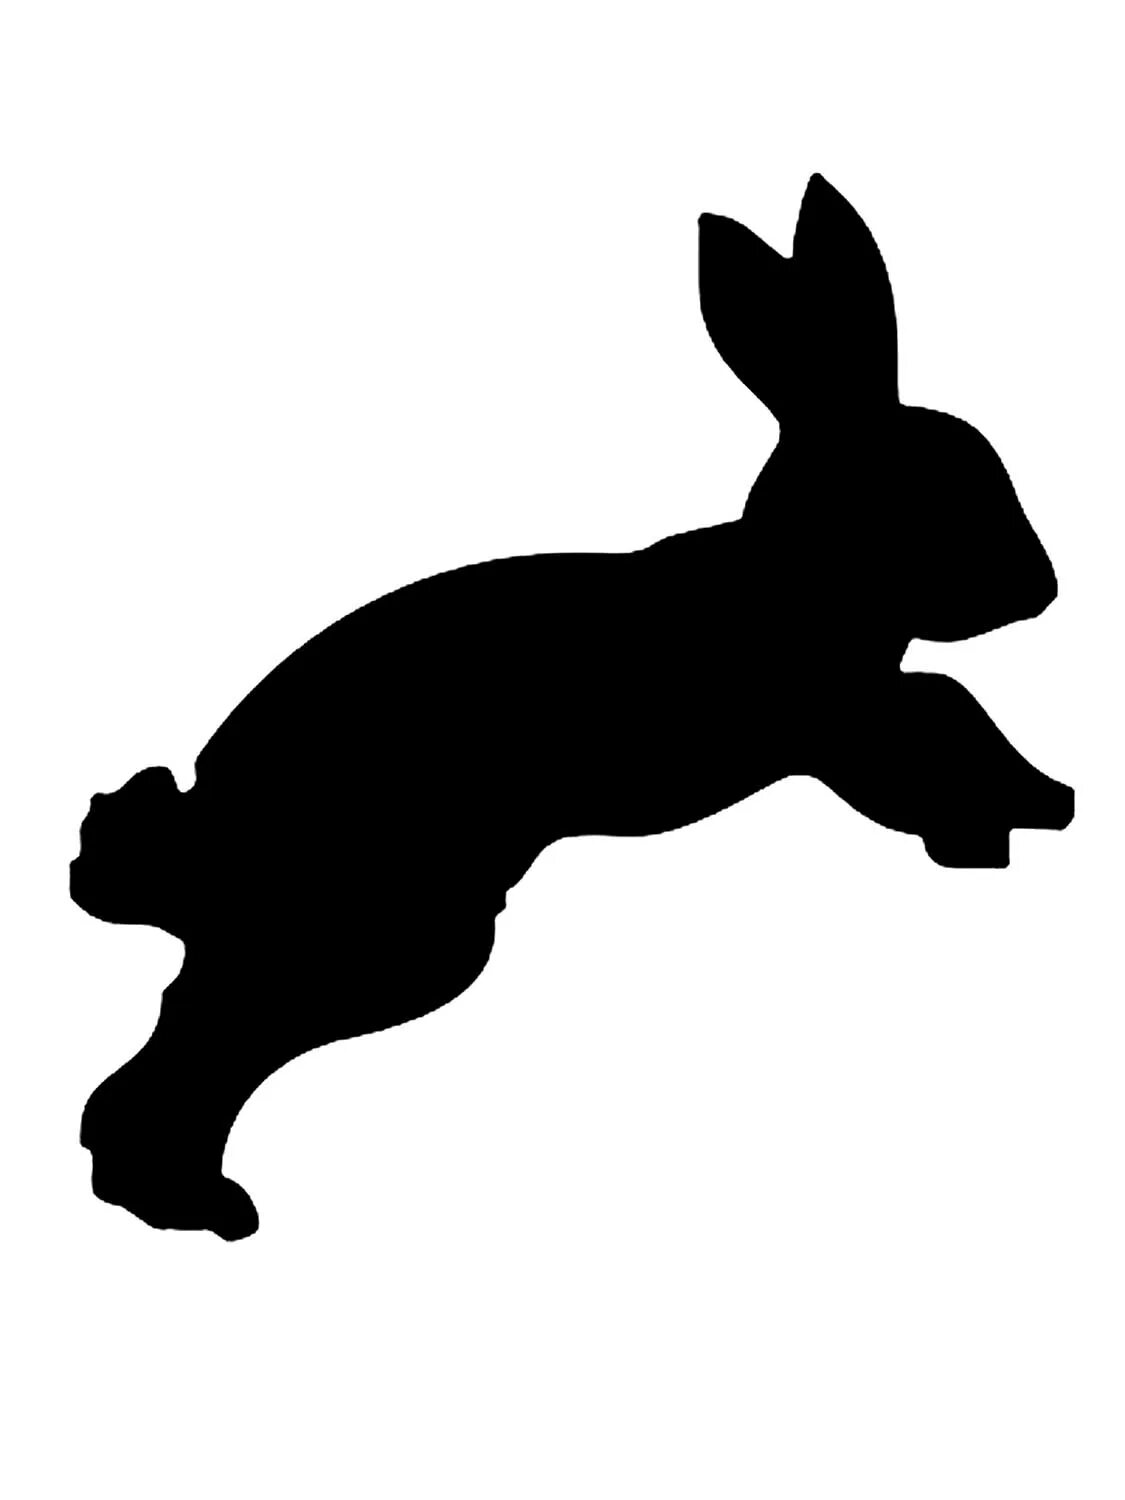 Силуэты зайцев. Силуэт зайца. Силуэт бегущего зайца. Бегущий кролик силуэт. Заяц в прыжке силуэт.